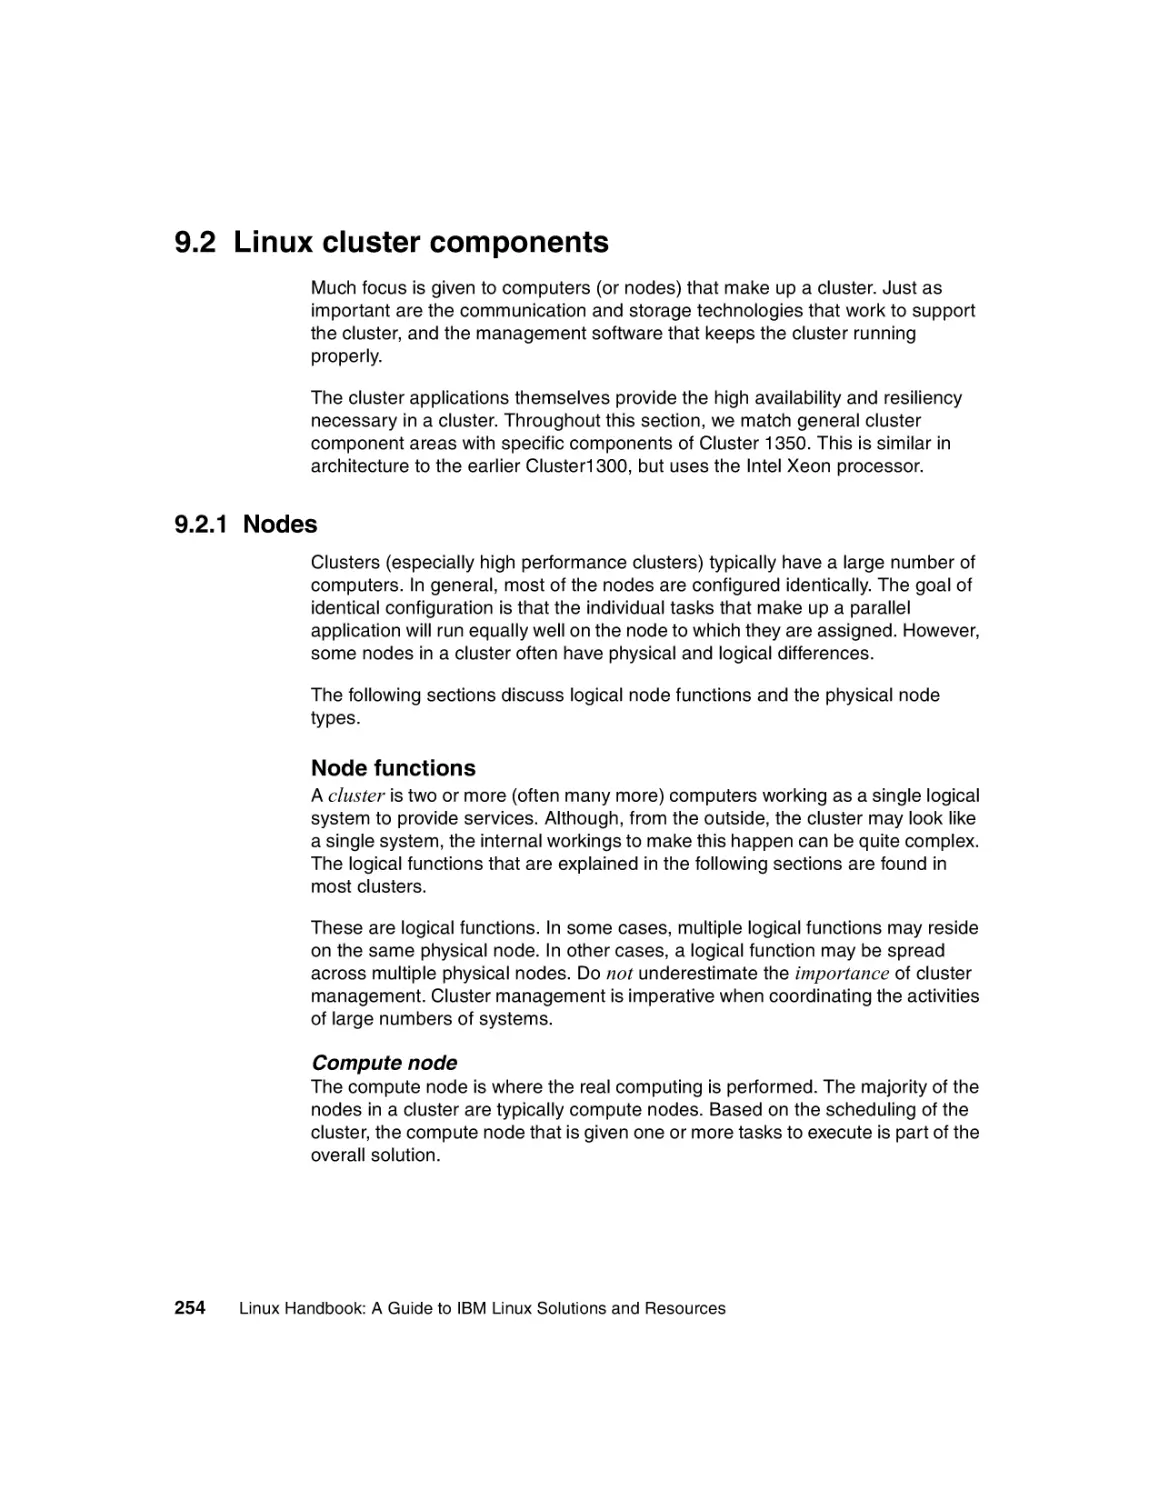 9.2 Linux cluster components
9.2.1 Nodes